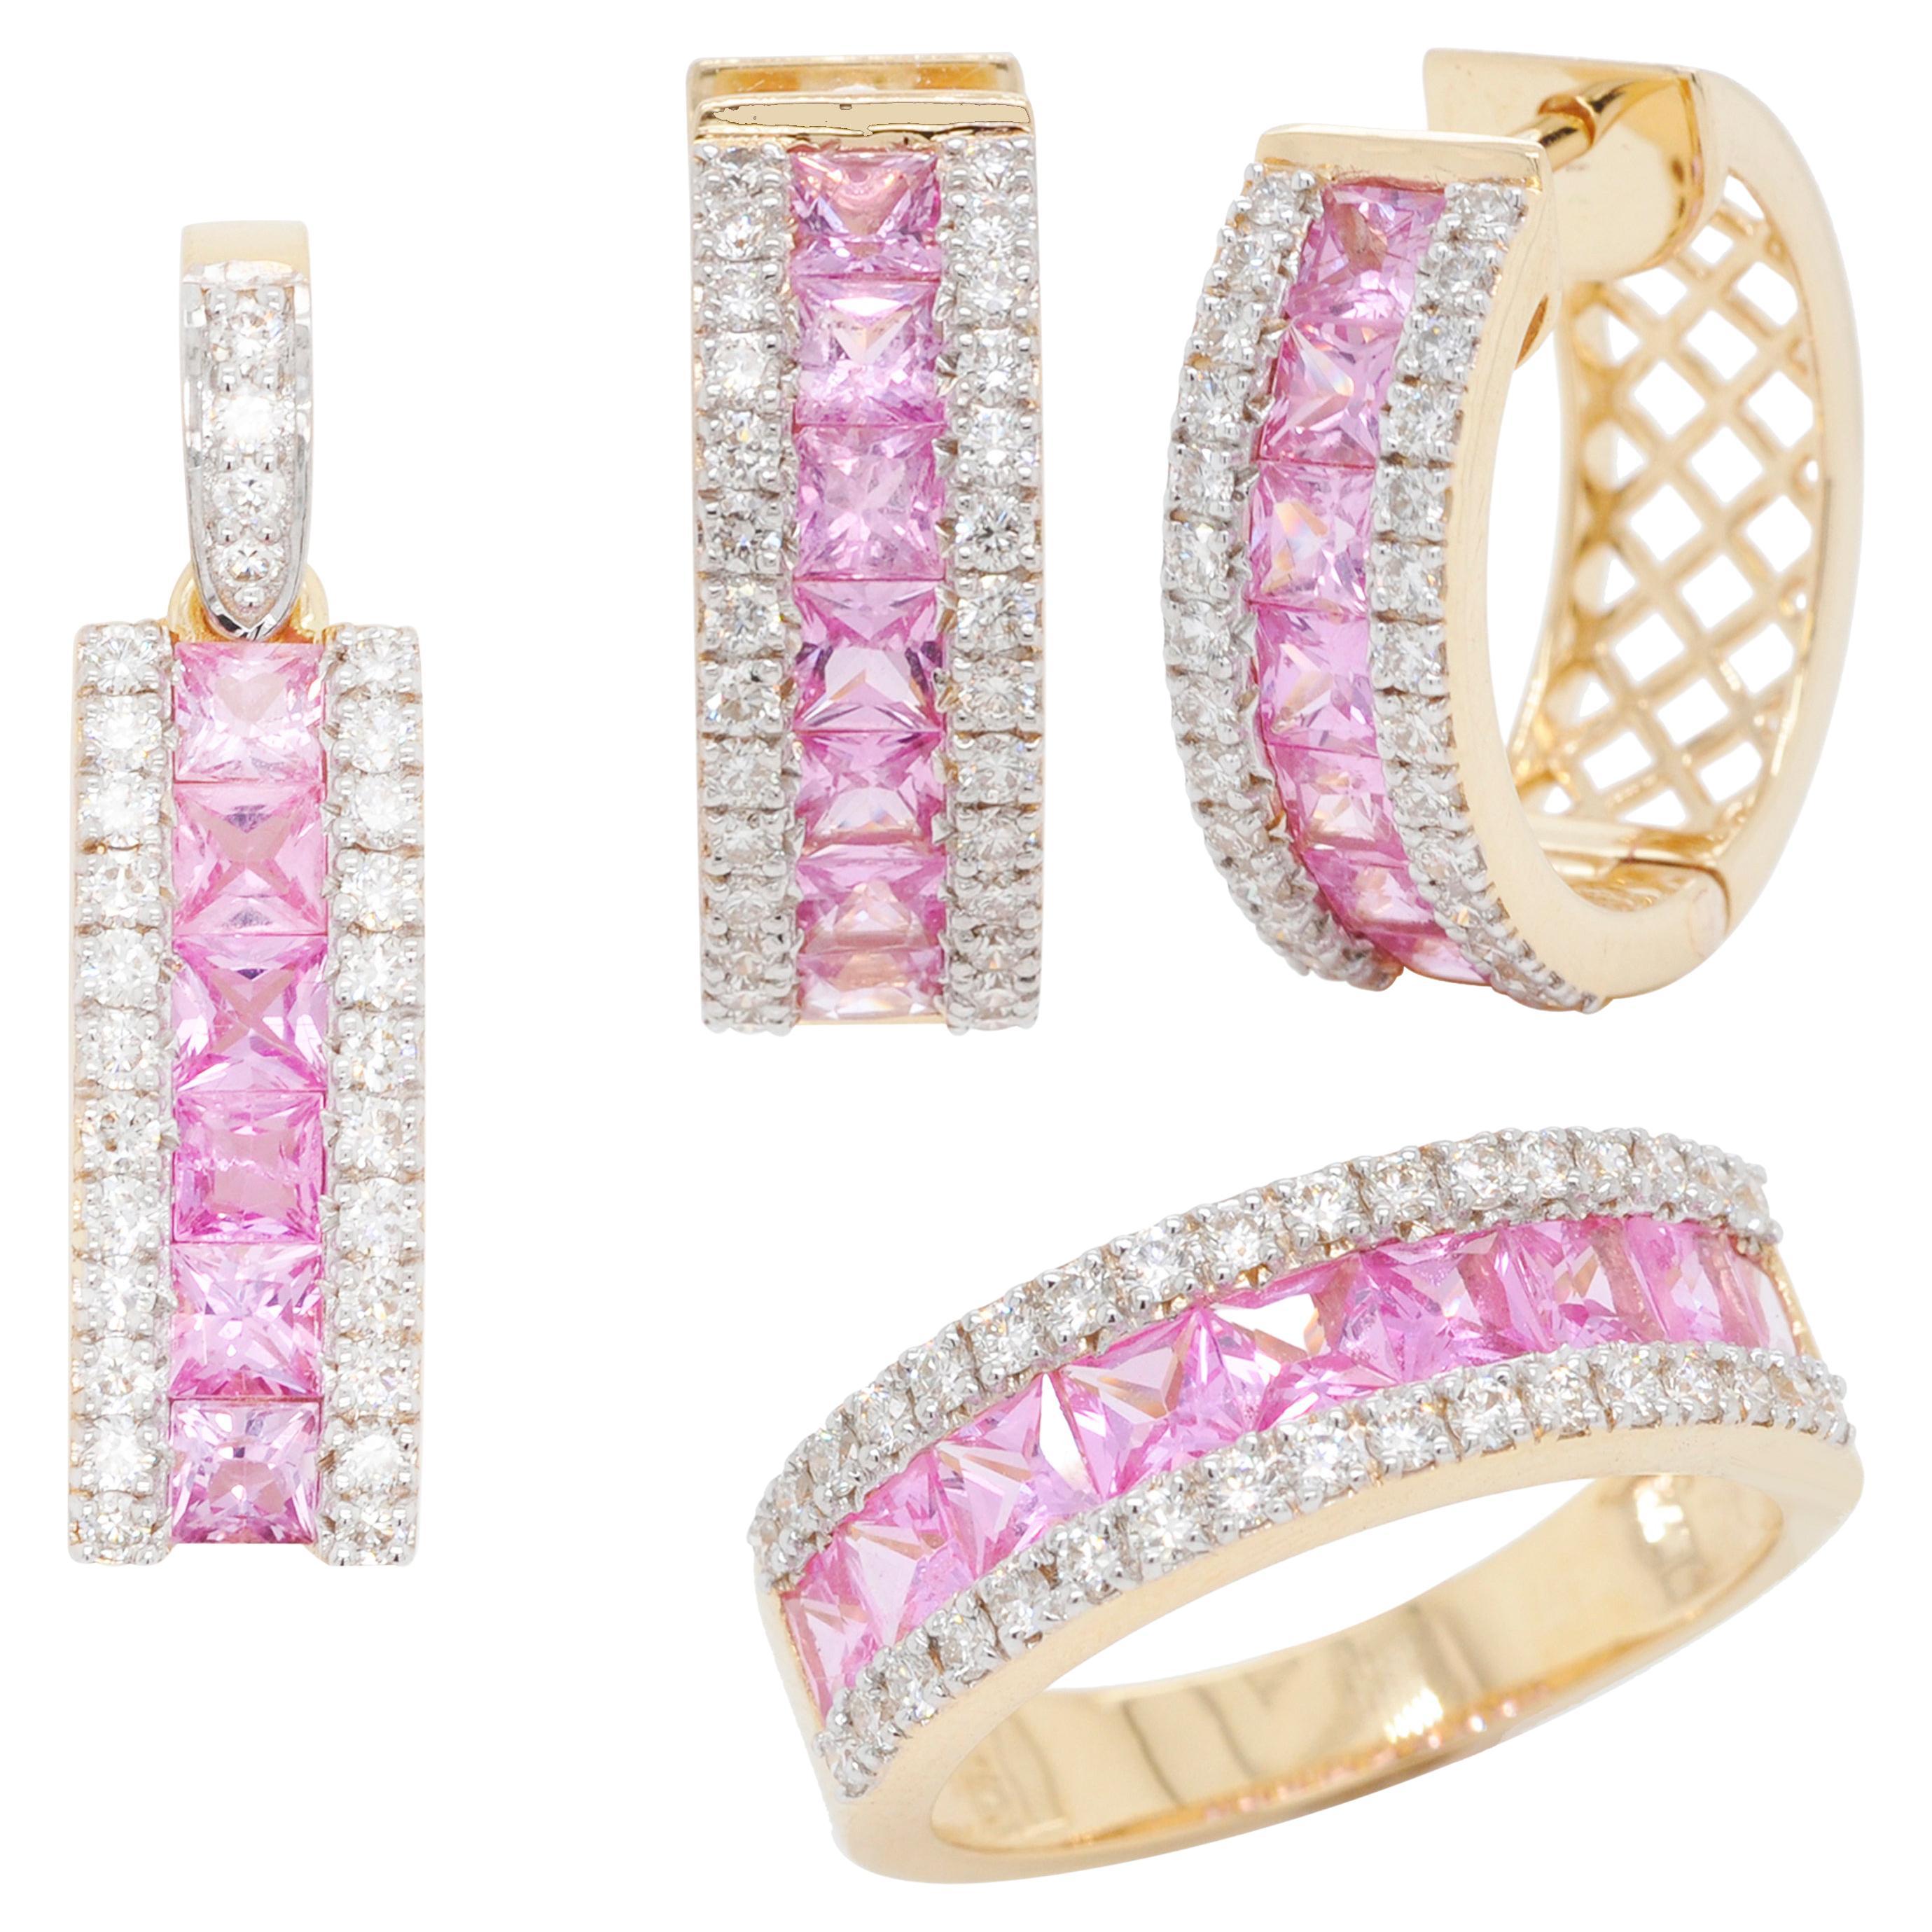 18 Karat Gold Prinzessinnenschliff Rosa Saphir Diamant Anhänger Creolen Ring Set